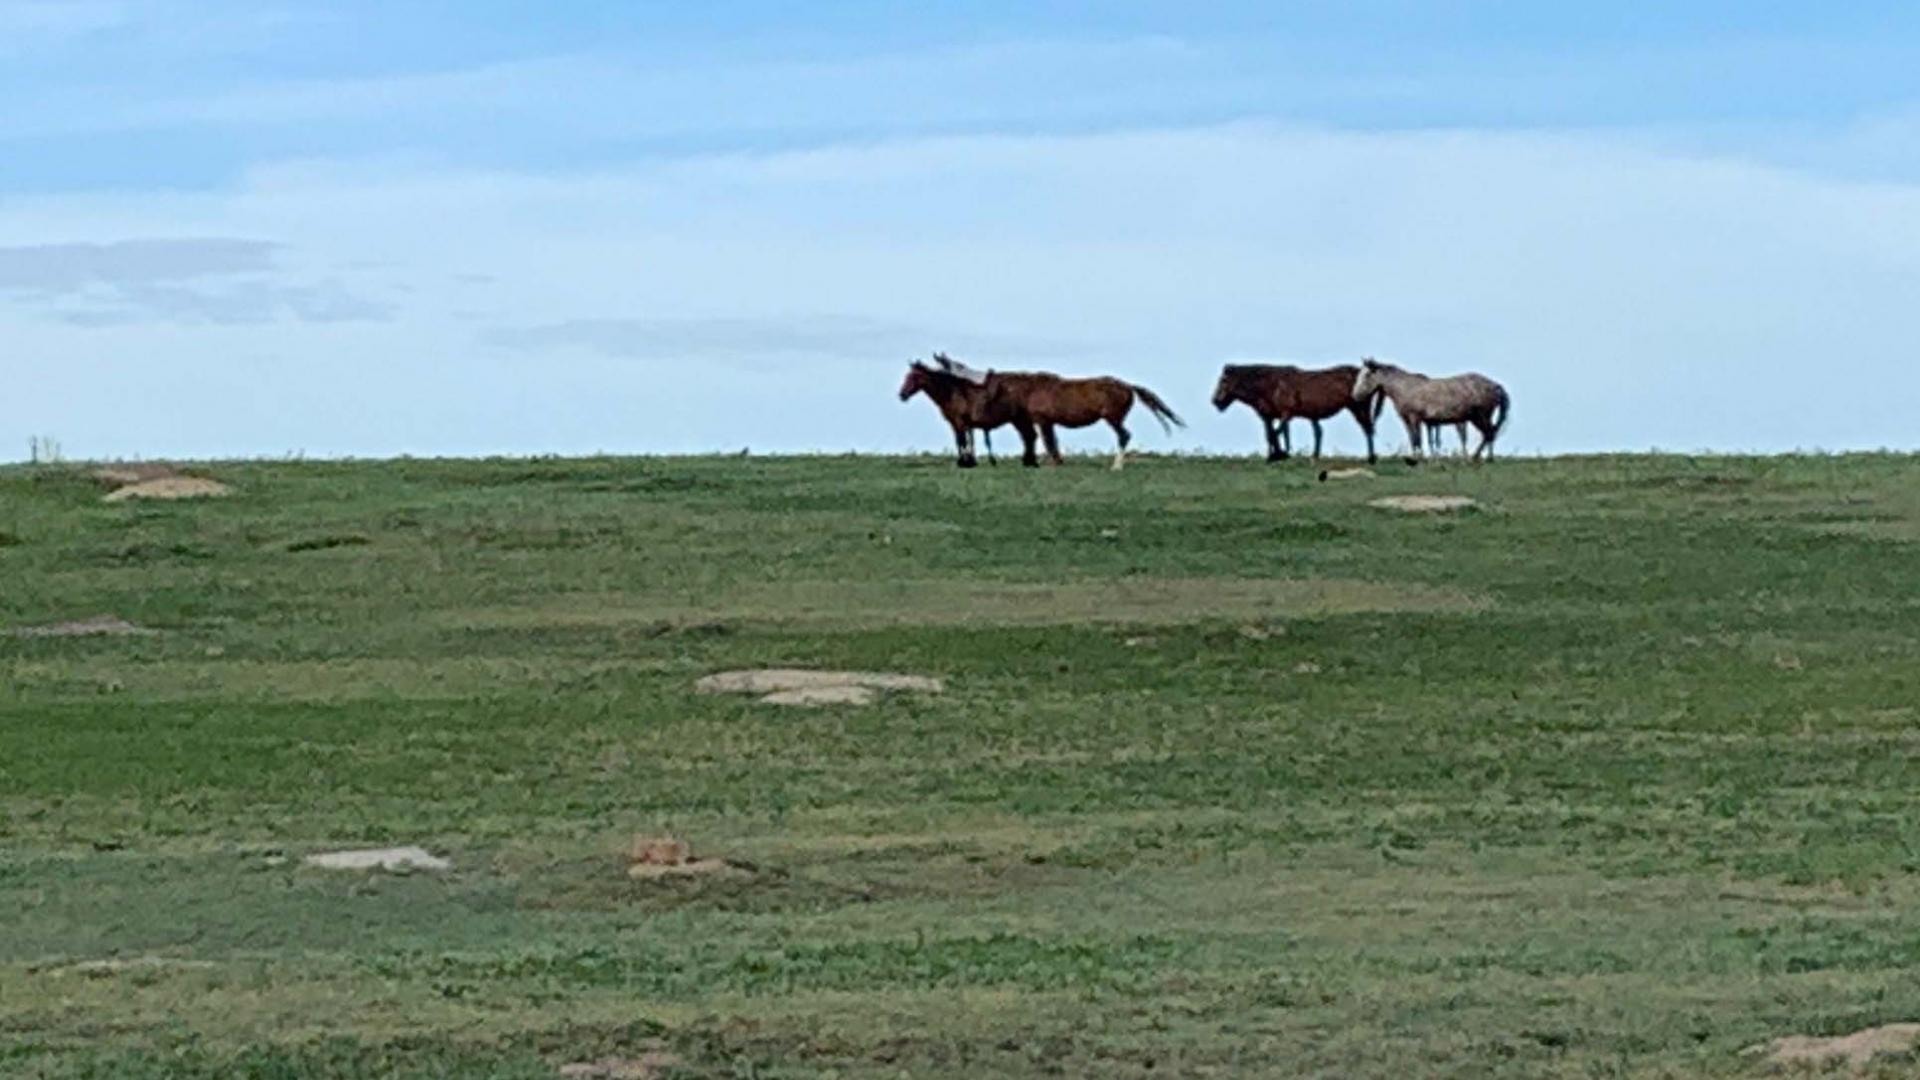 Horses and prairiedogs on grassland